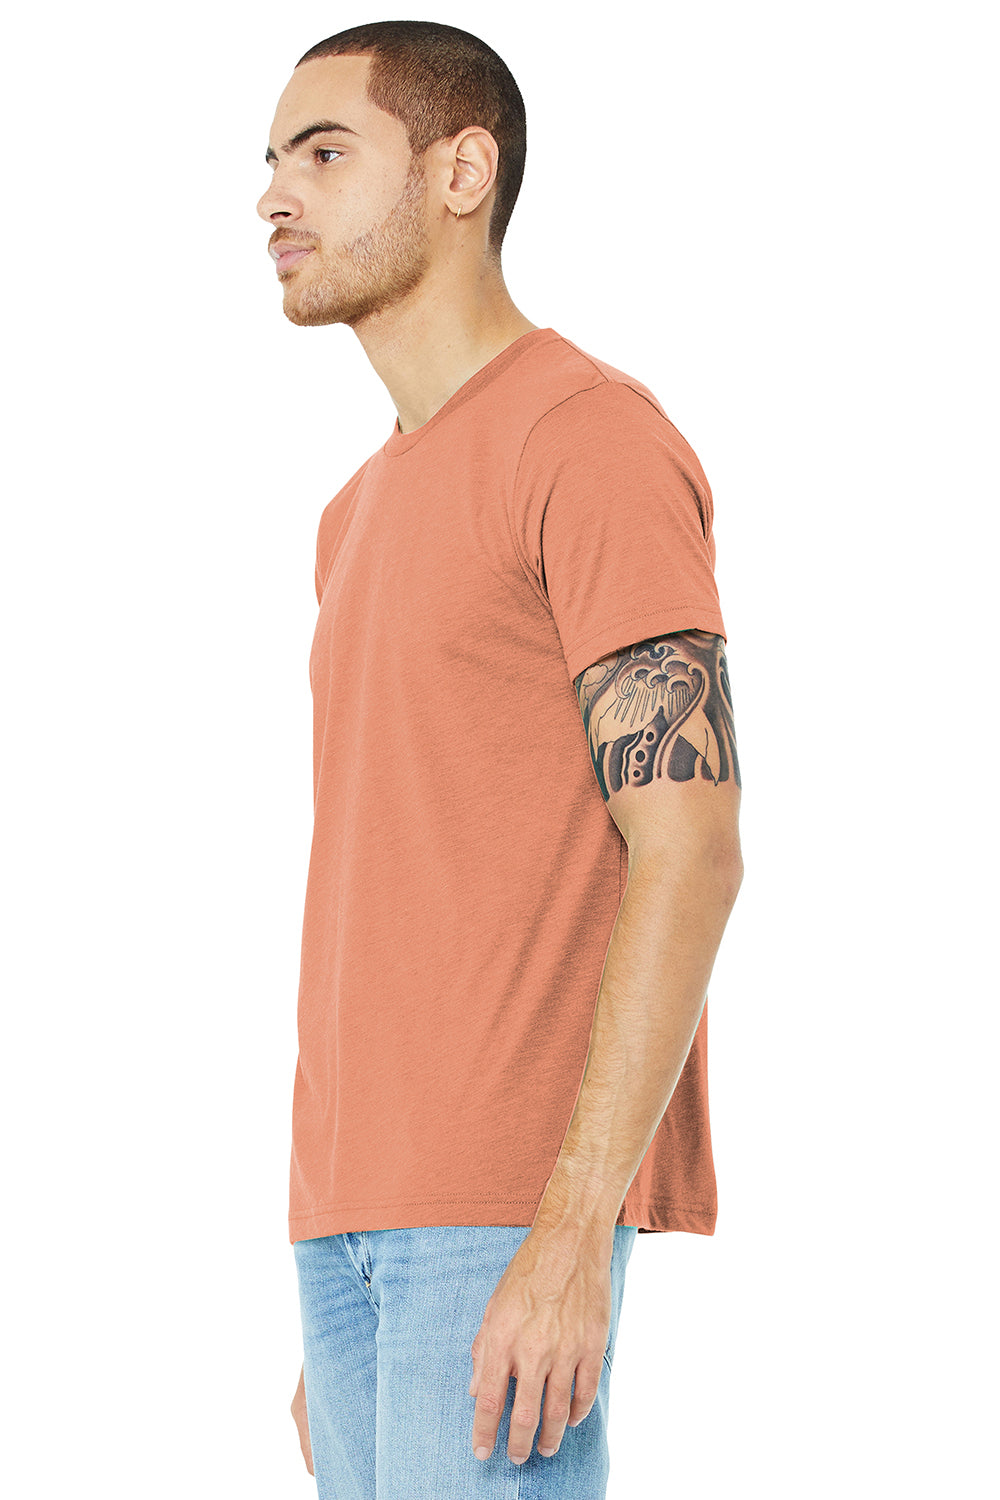 Bella + Canvas BC3413/3413C/3413 Mens Short Sleeve Crewneck T-Shirt Sunset Orange Model 3Q